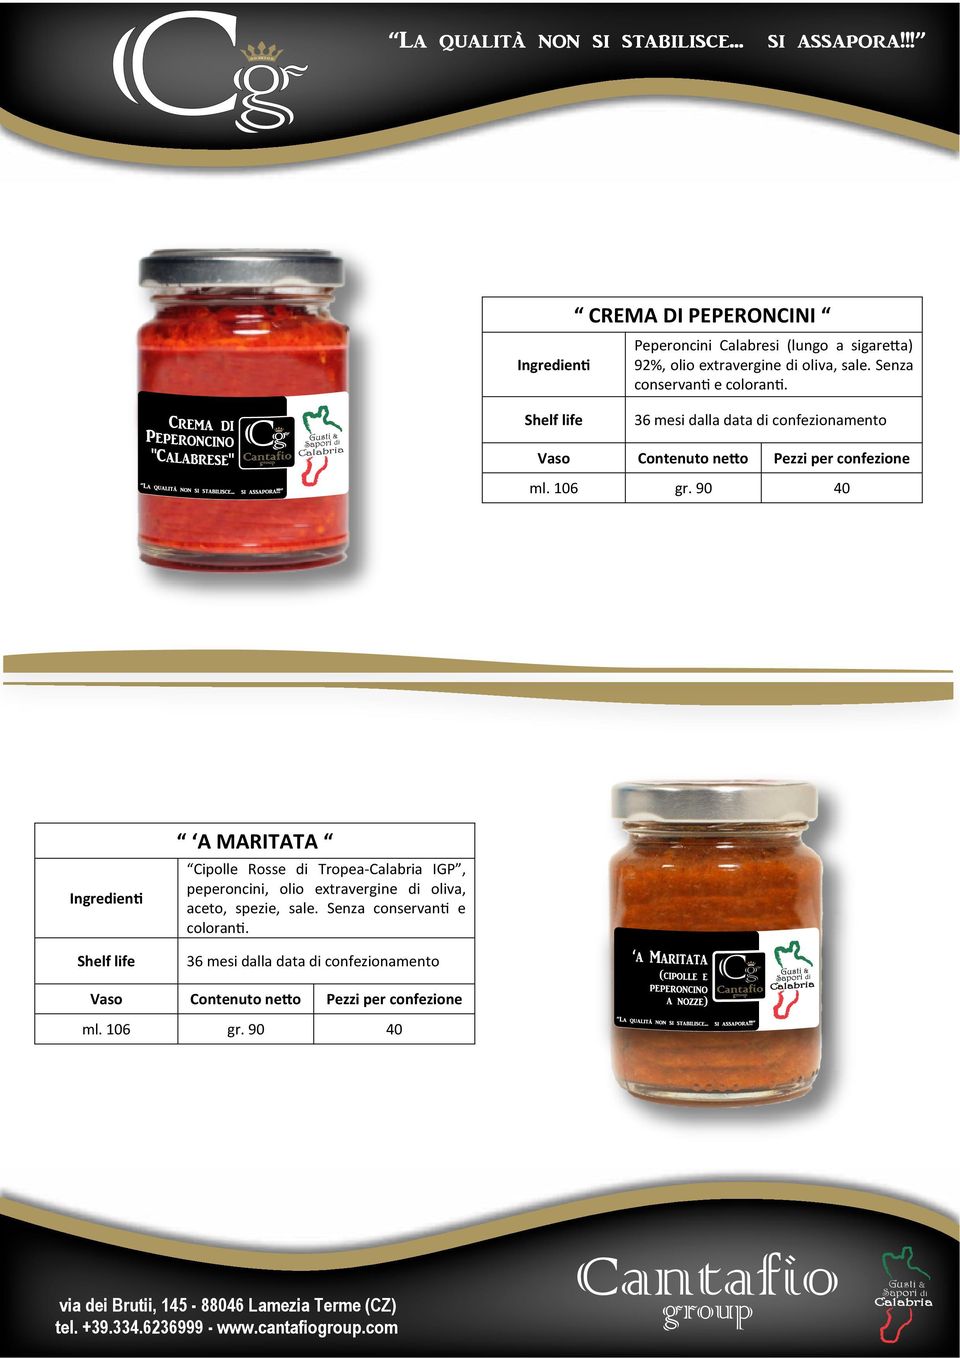 A MARITATA Cipolle Rosse di Tropea- IGP, peperoncini, olio extravergine di